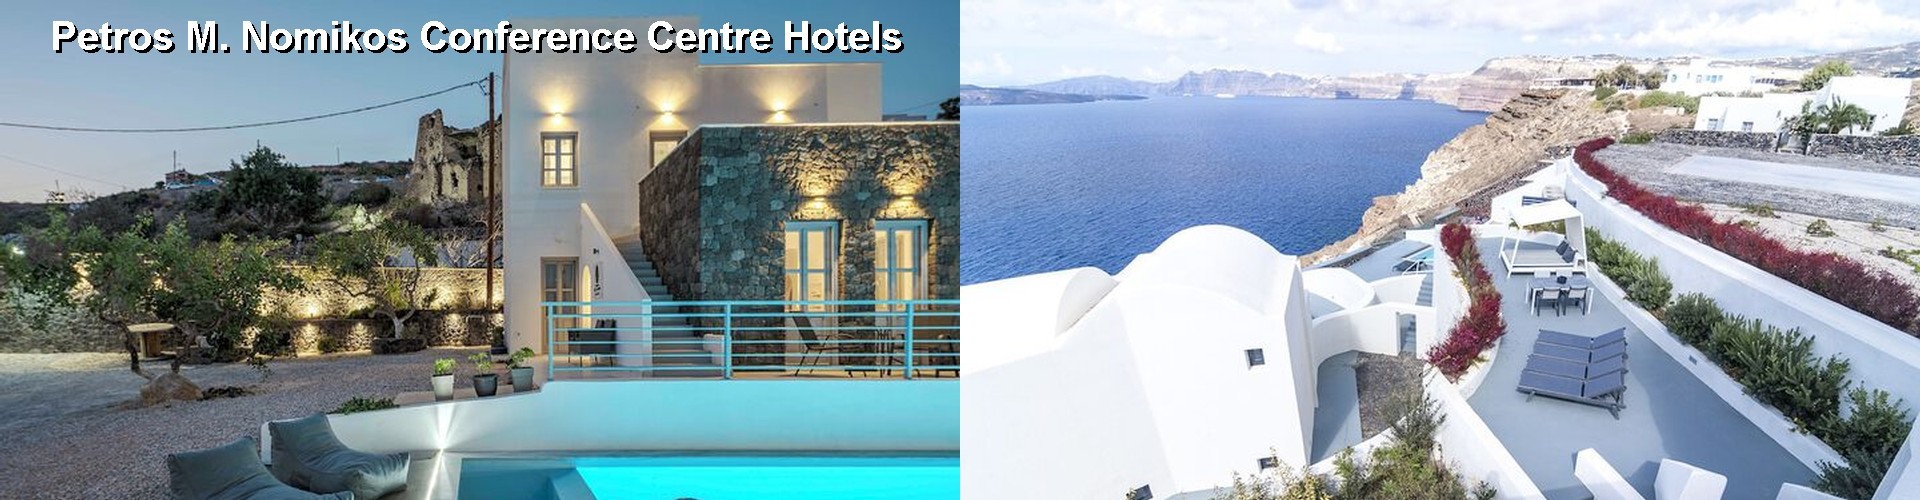 5 Best Hotels near Petros M. Nomikos Conference Centre